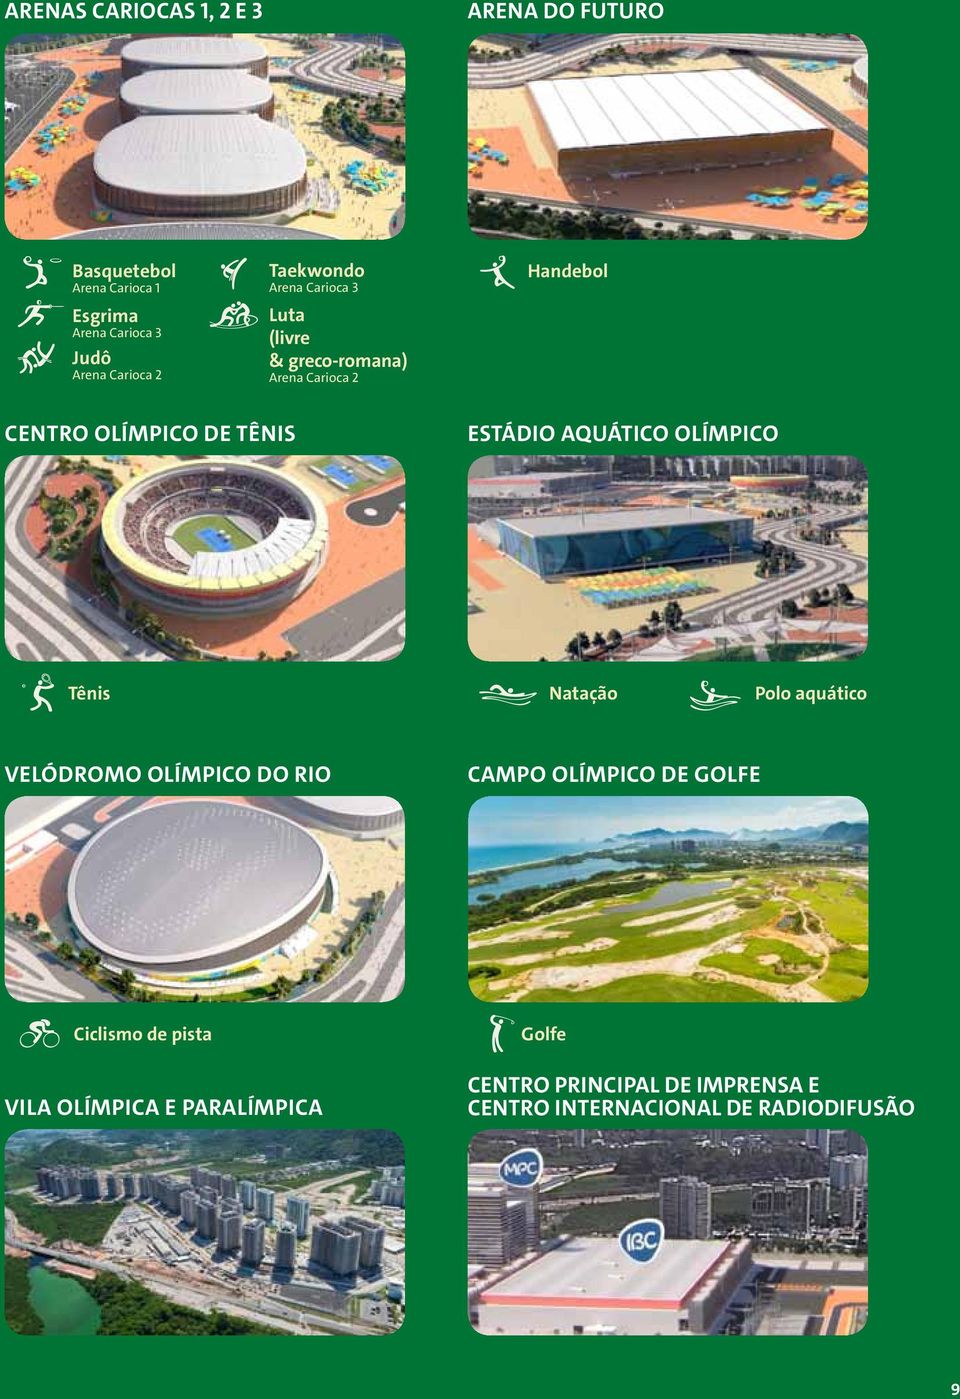 Tênis Estádio Aquático Olímpico Tênis Natação Polo aquático Velódromo Olímpico do Rio Campo Olímpico de Golfe